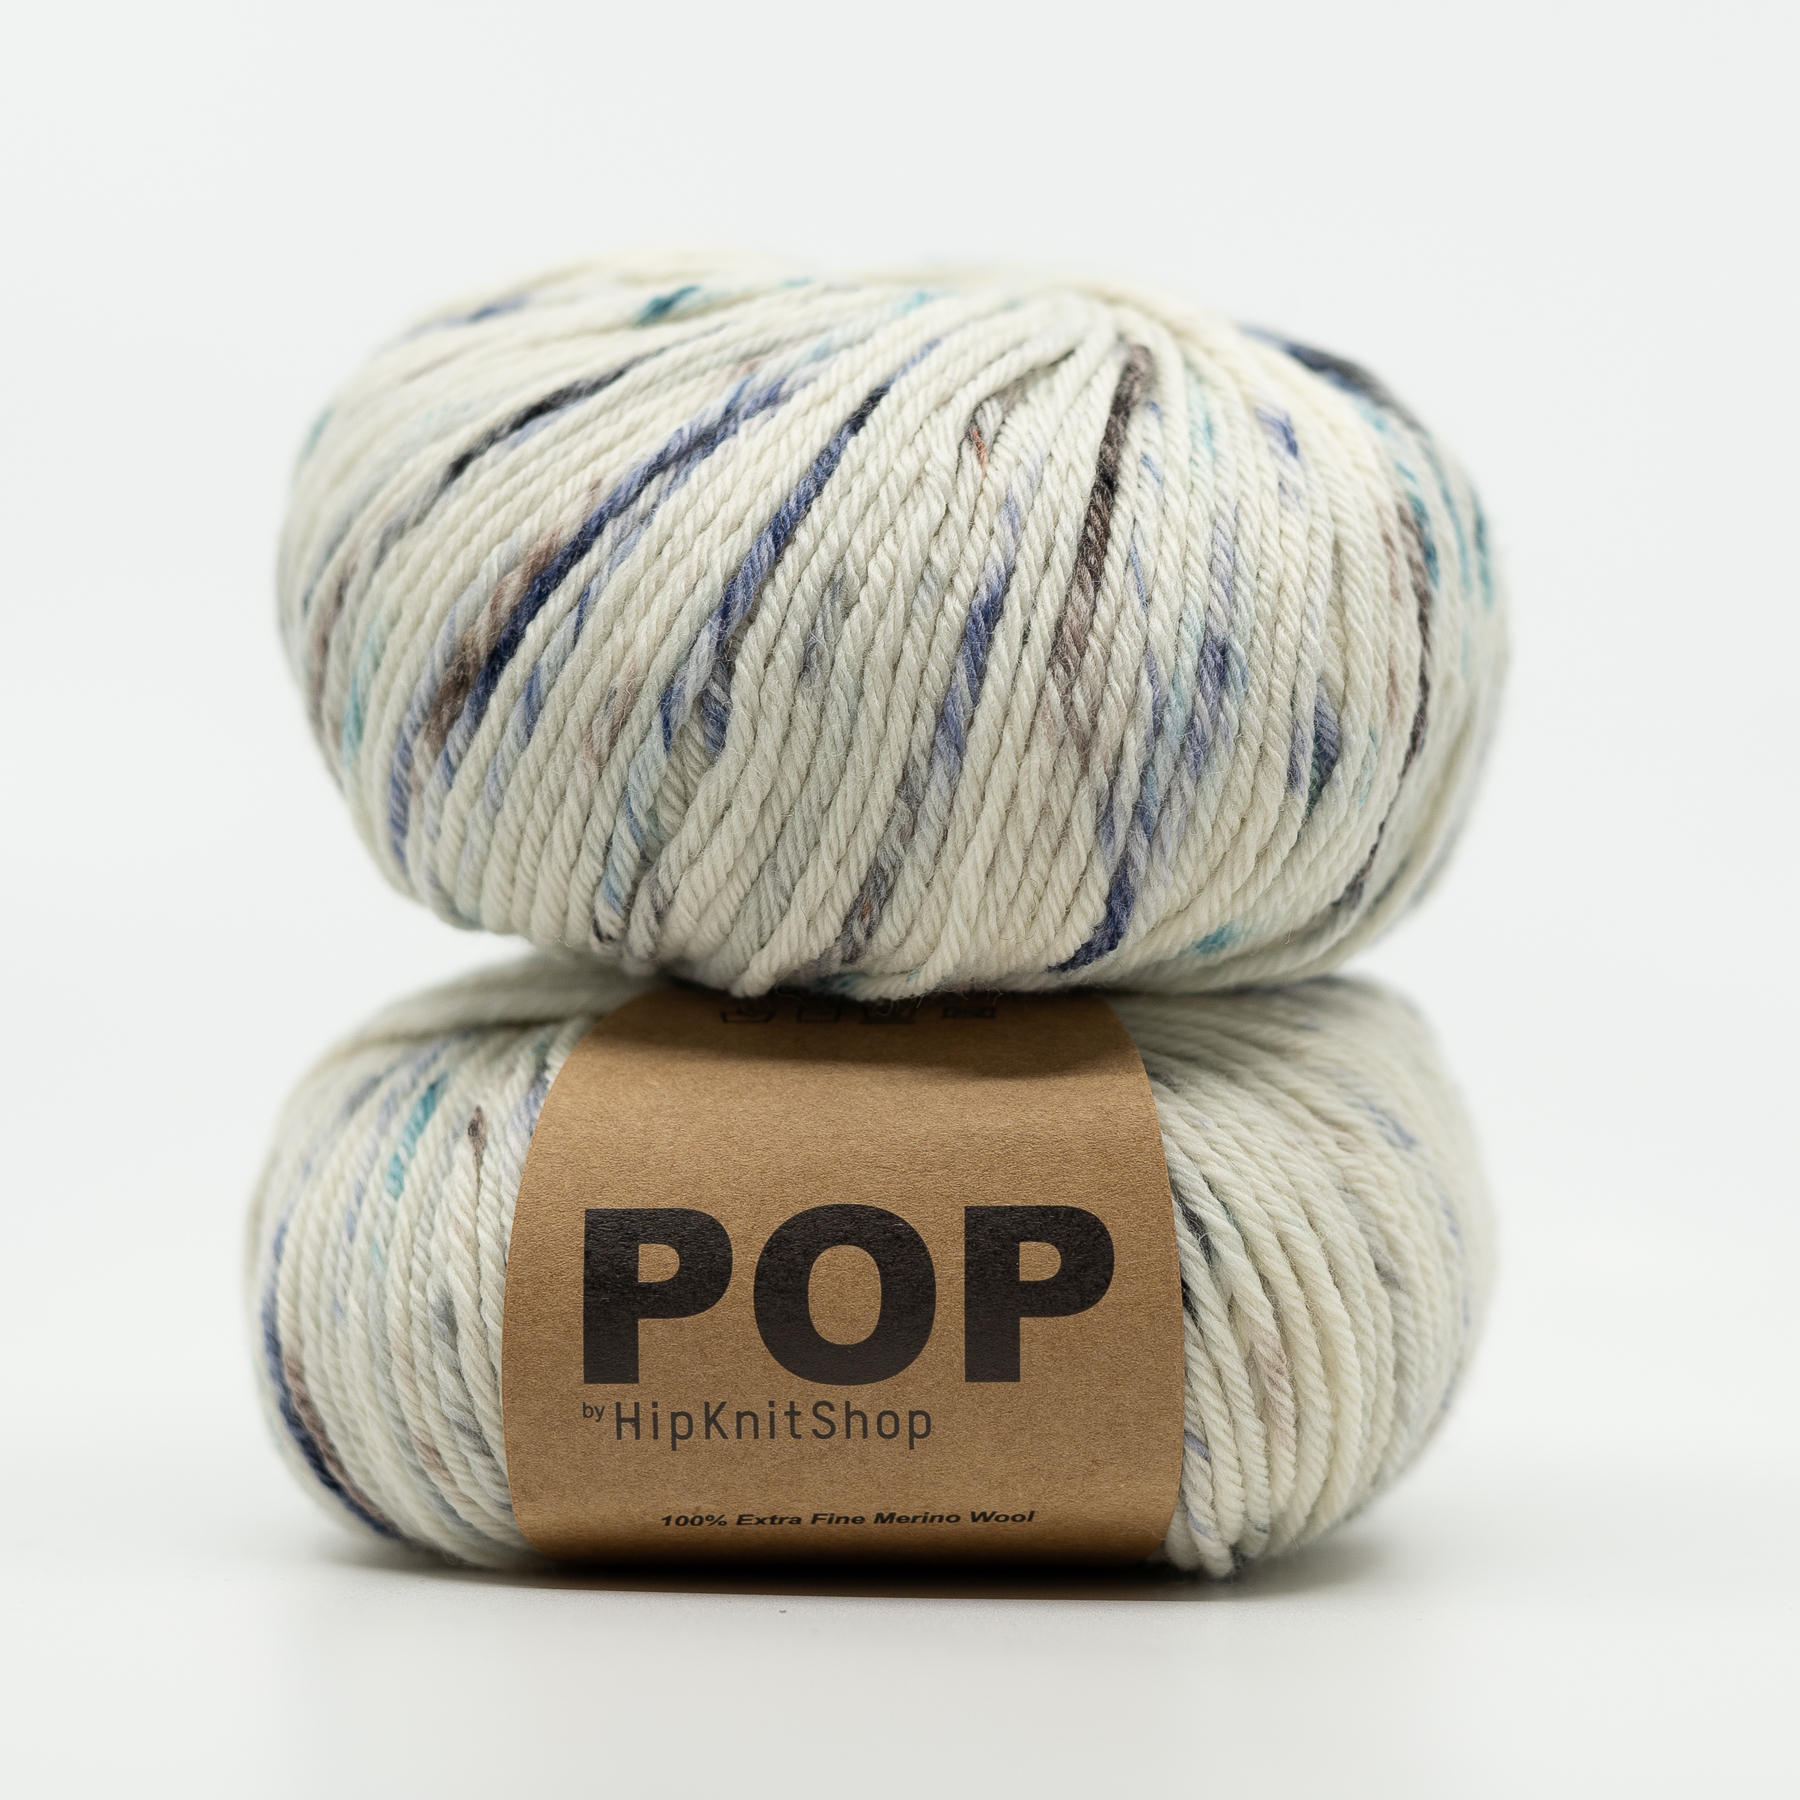  - Swan | Pop merino sprinkle yarn | Hand dyed yarn - by HipKnitShop - 26/04/2021